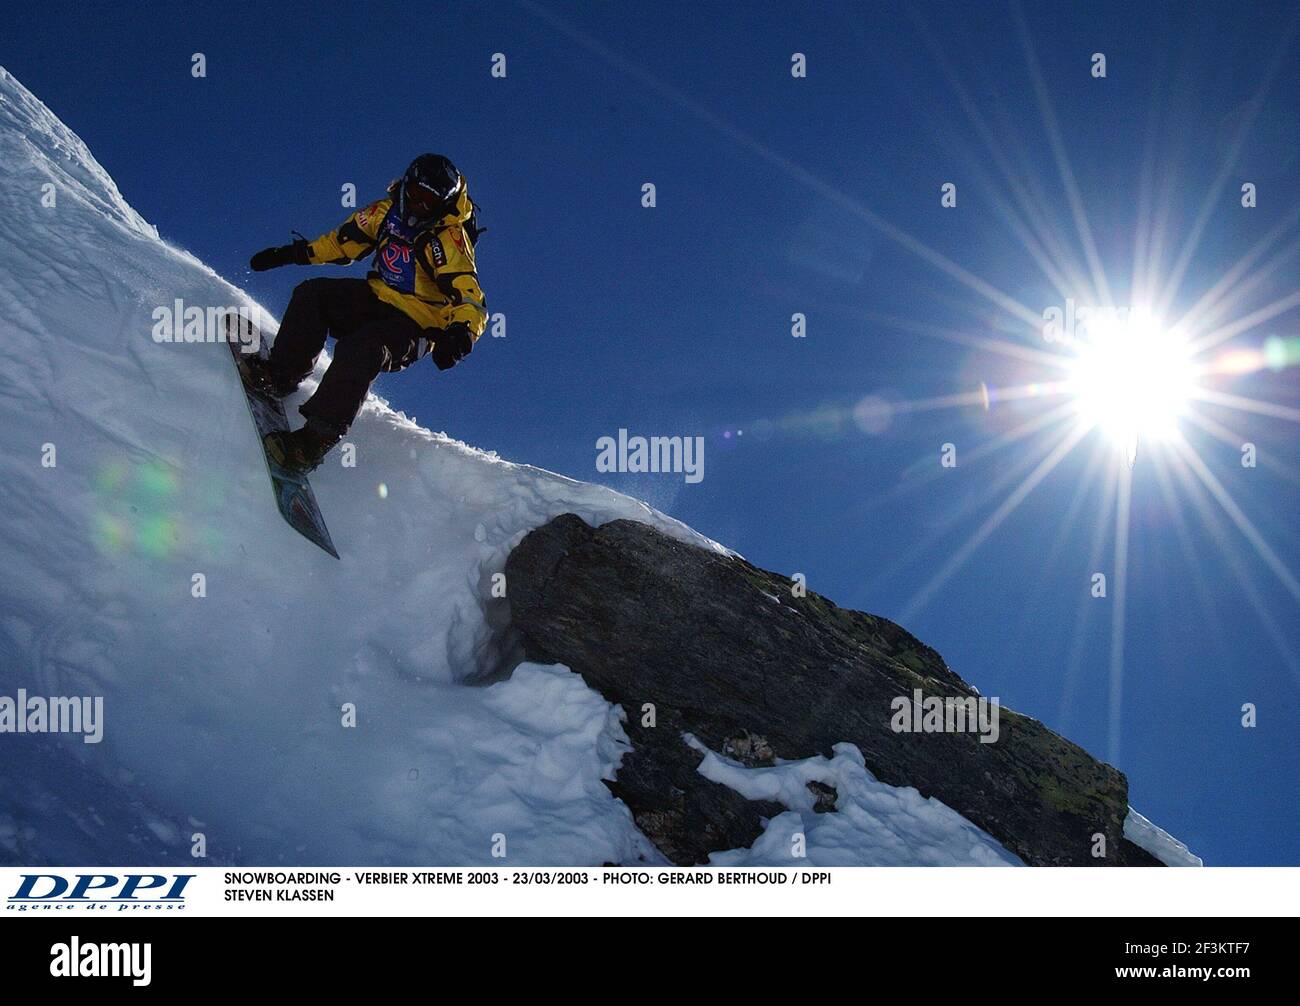 SNOWBOARDING - VERBIER XTREME 2003 - 23/03/2003 - PHOTO: GERARD BERTHOUD / DPPI STEVEN KLASSEN Stock Photo